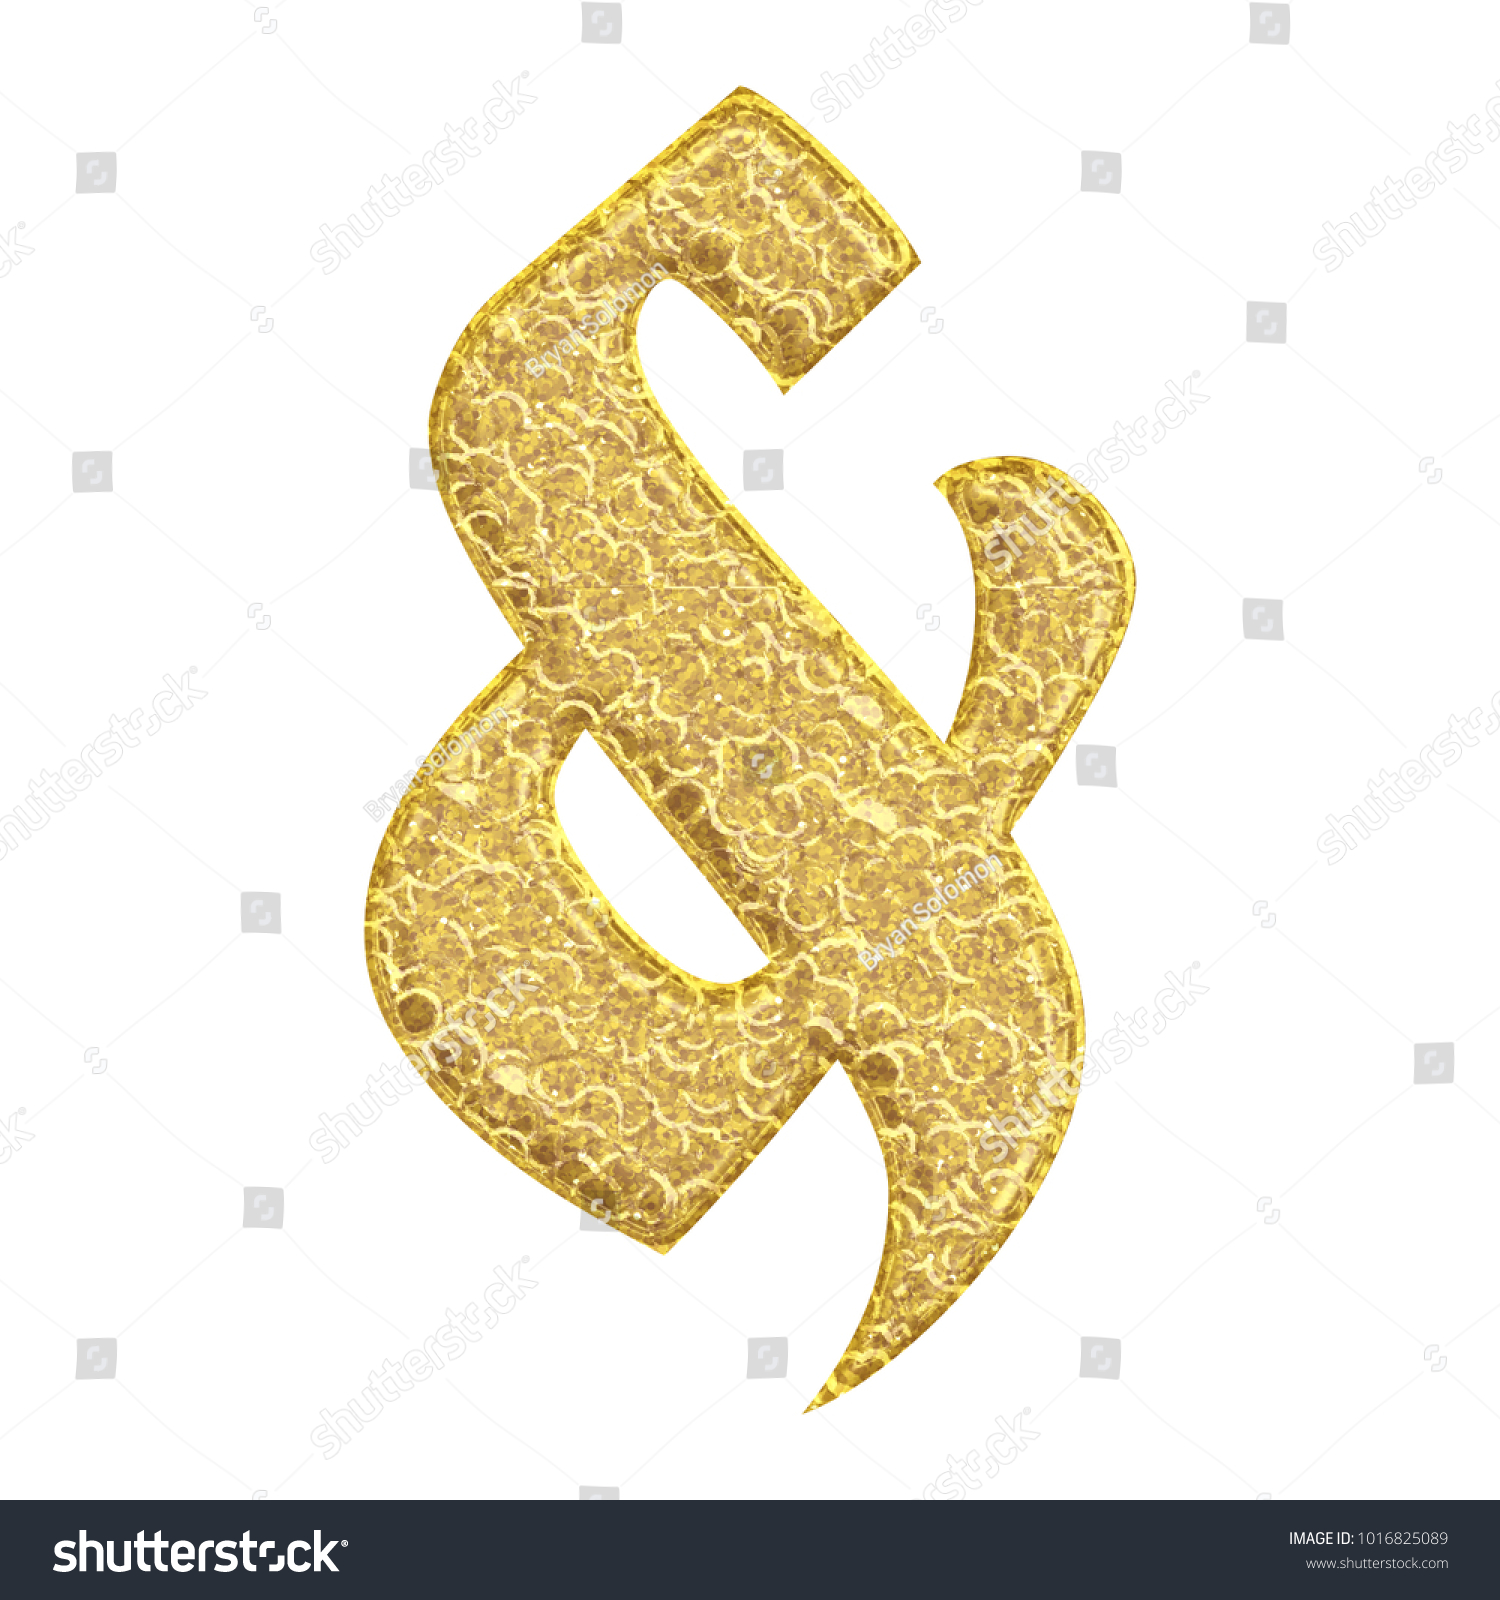 Aged Gold Rough Cracked Golden Ampersand Stock Illustration ...